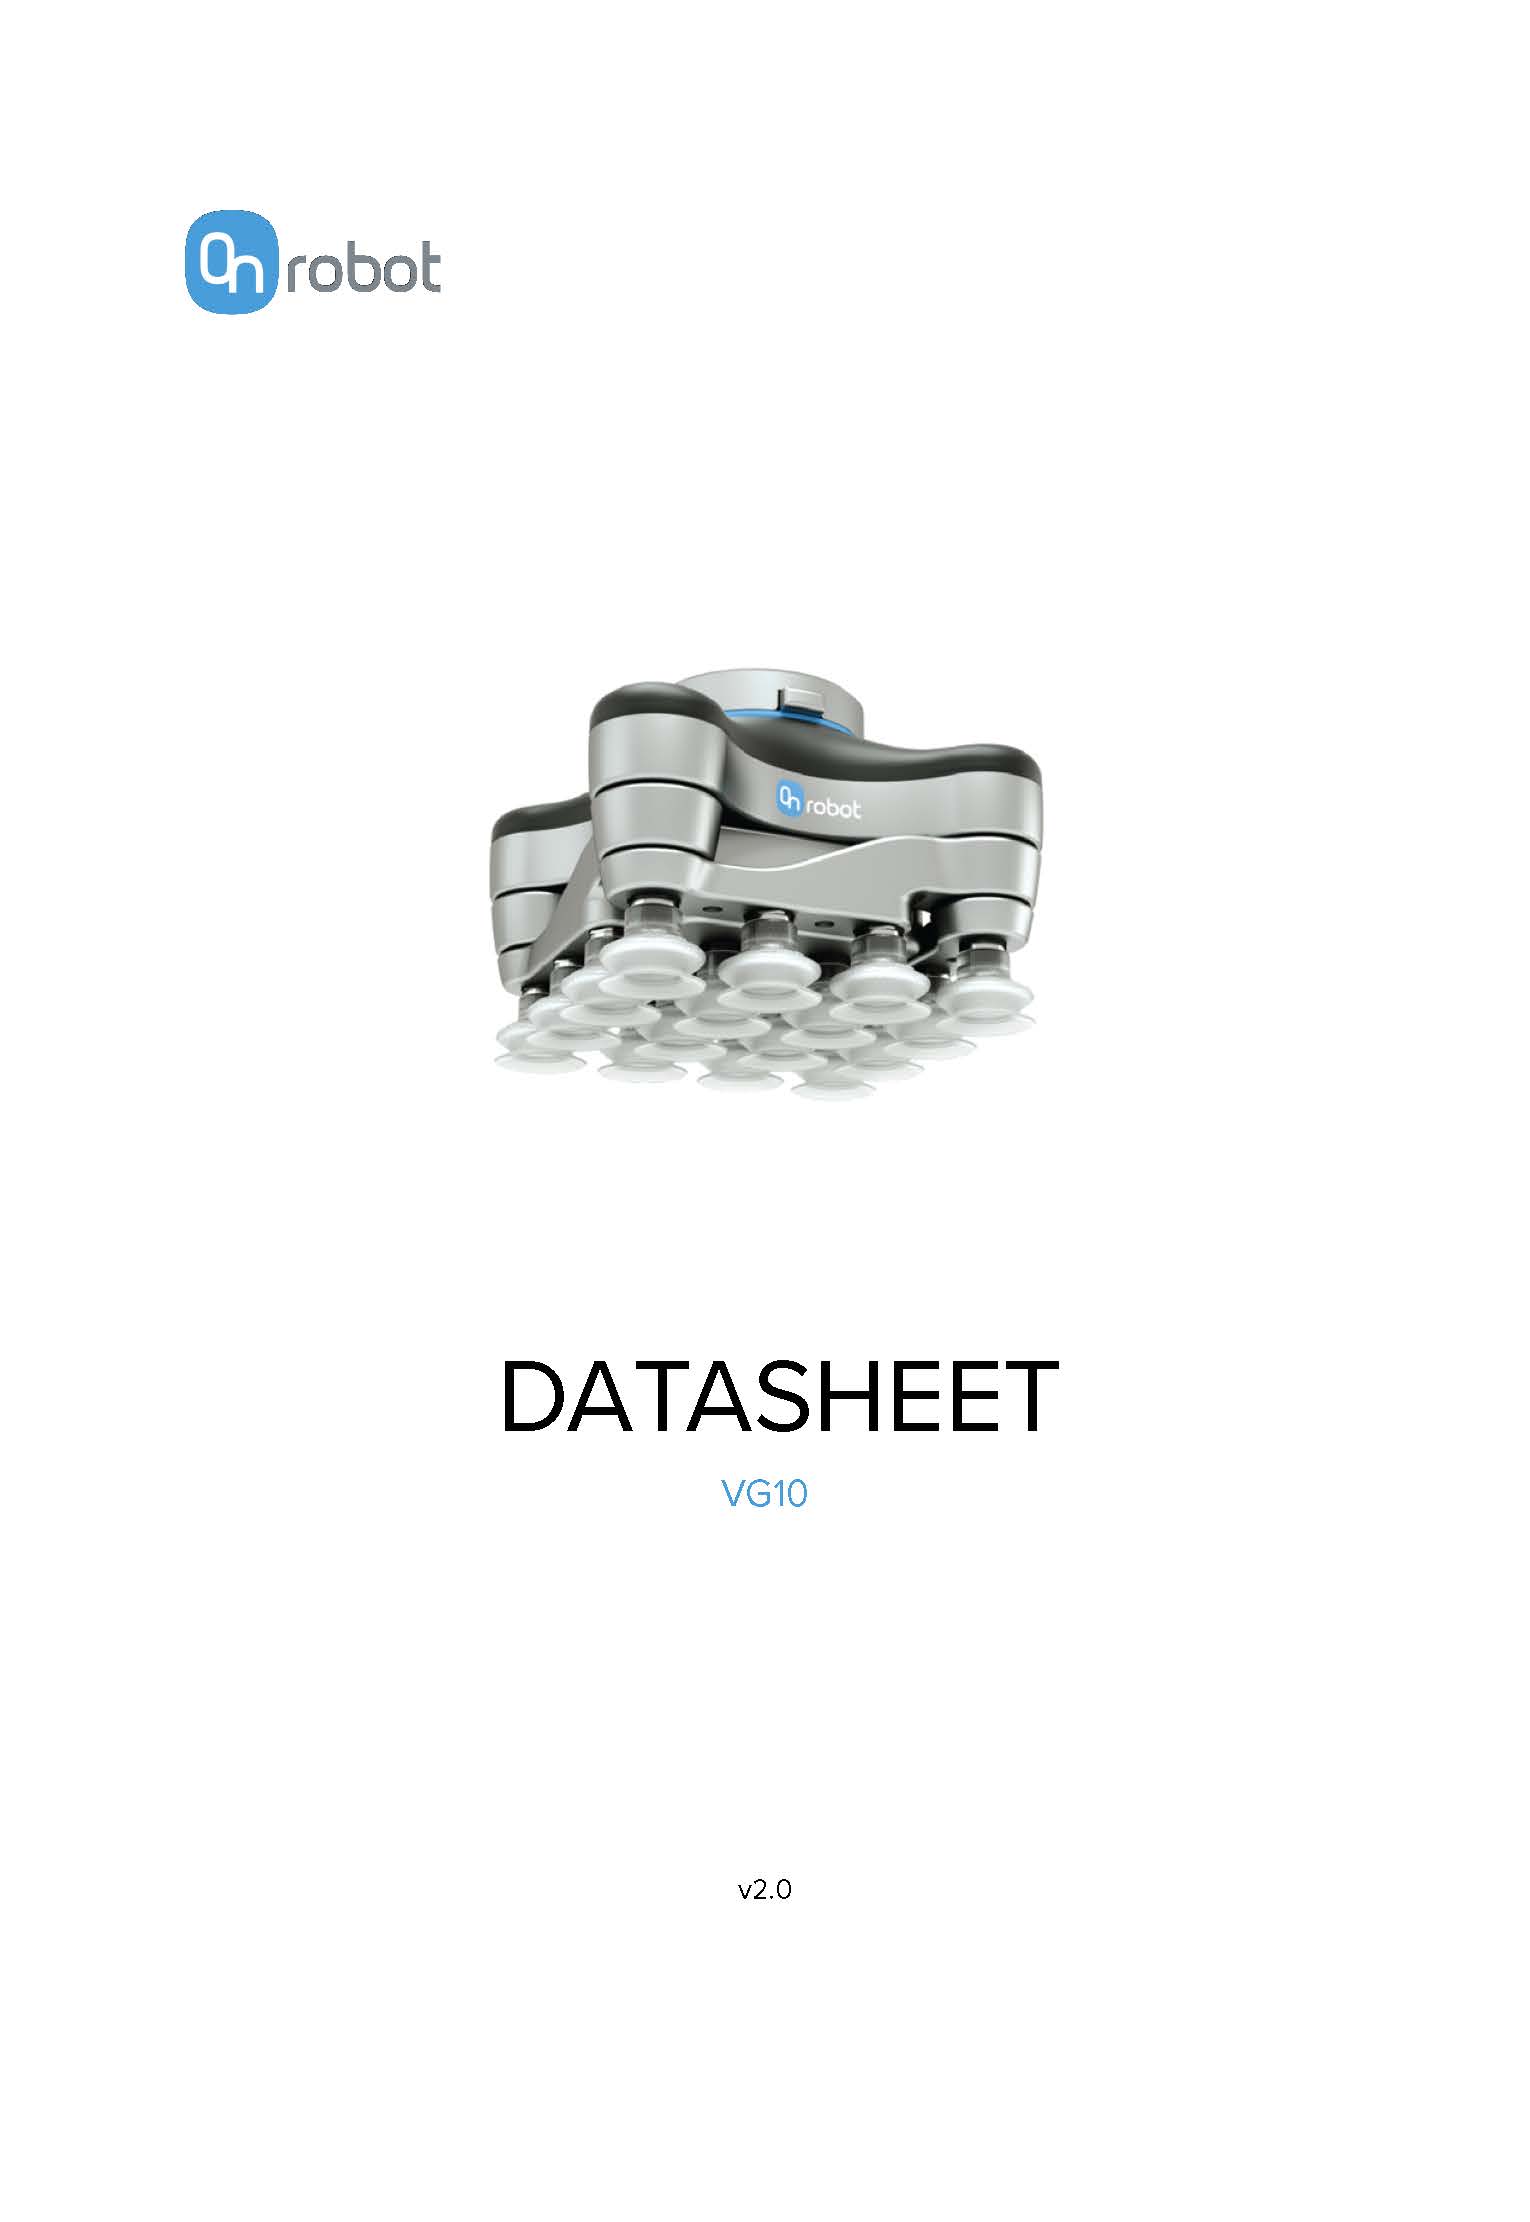 OnRobot VG10 Datasheet